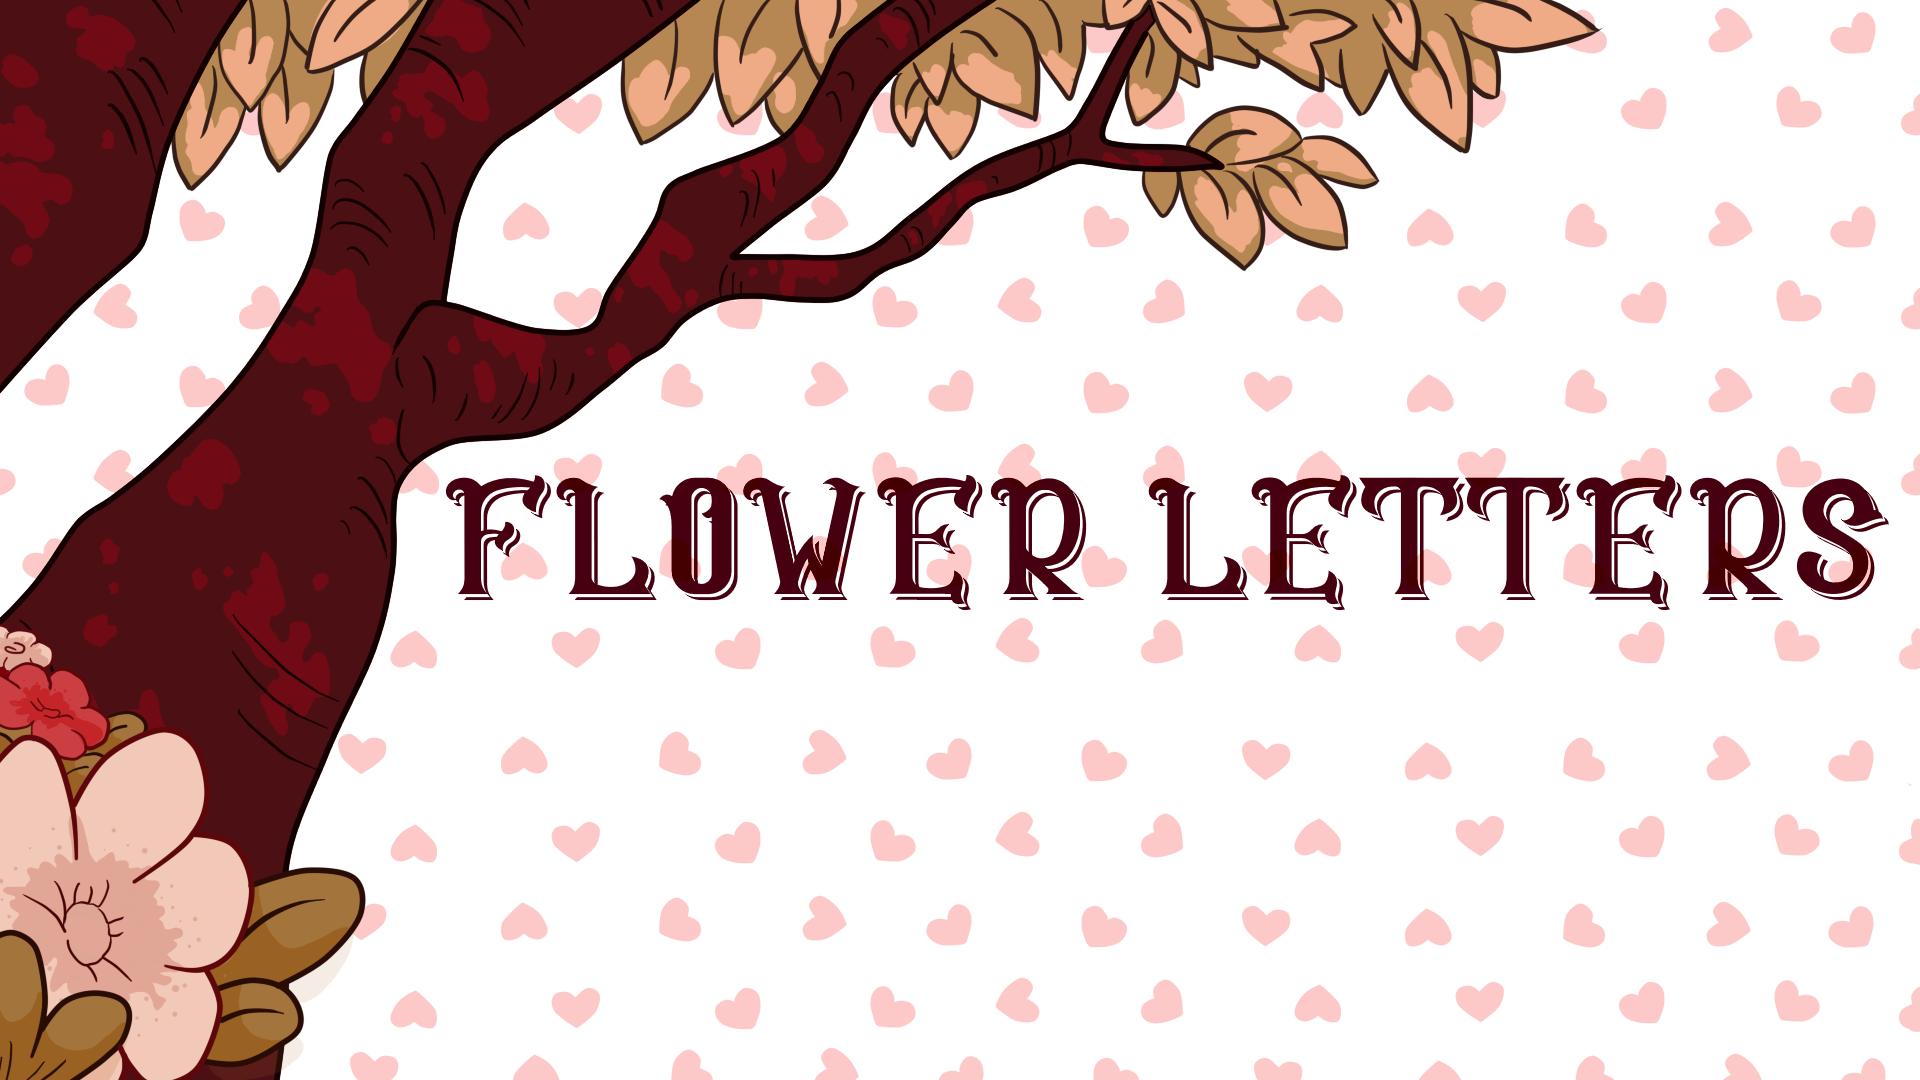 Flower letters